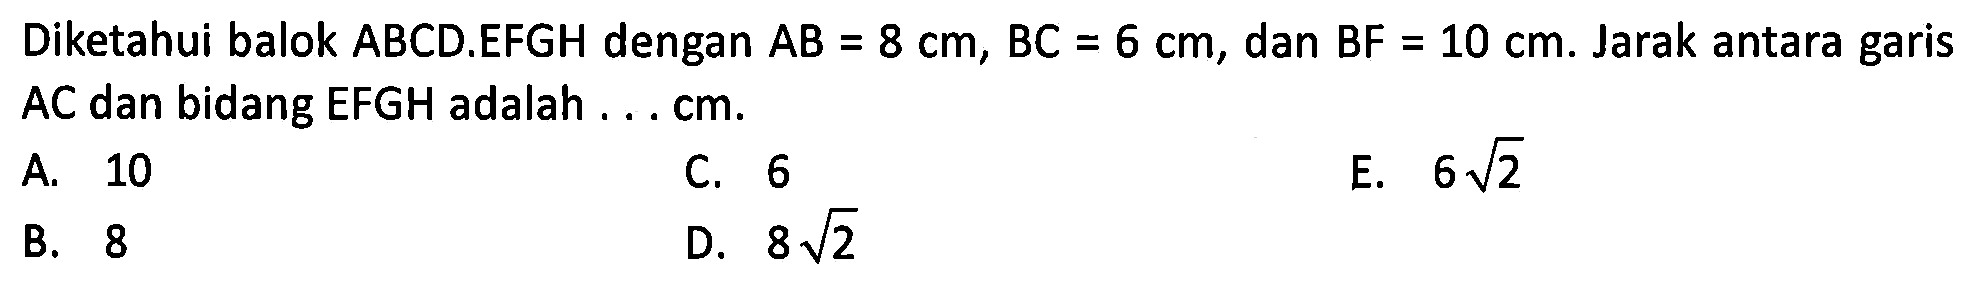 Diketahui balok ABCD.EFGH dengan AB = 8 cm, BC = 6 cm, dan BF 10 cm. Jarak antara garis AC dan bidang EFGH adalah ... cm.